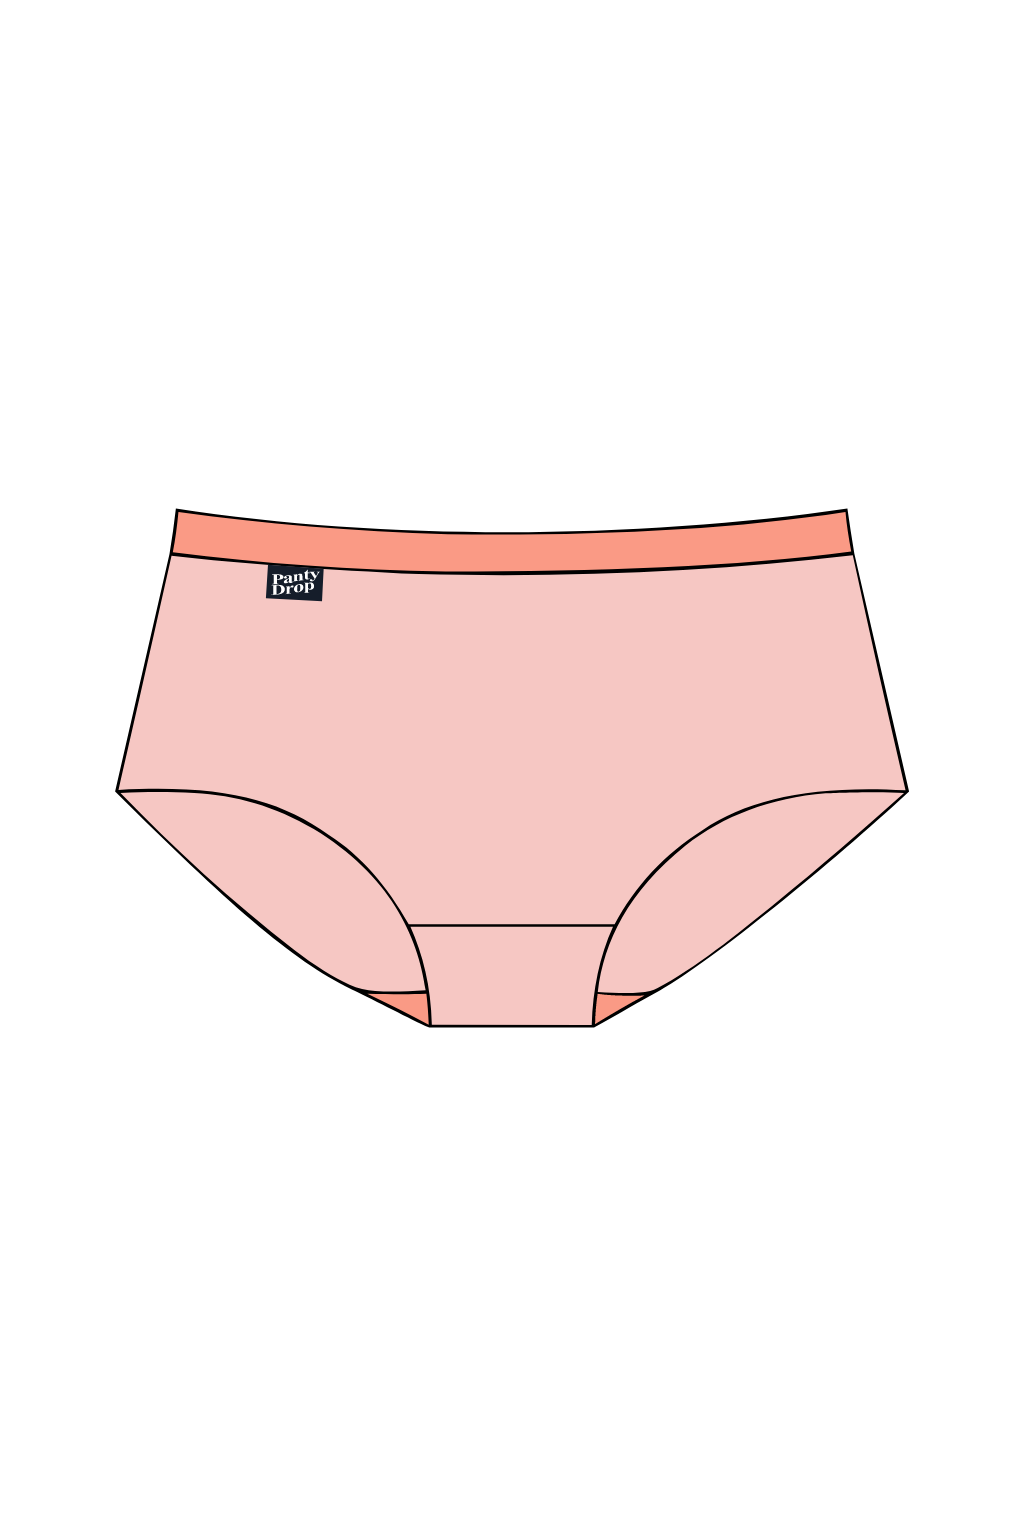 Perfect Panty v2 - Previous Colors – Panty Drop